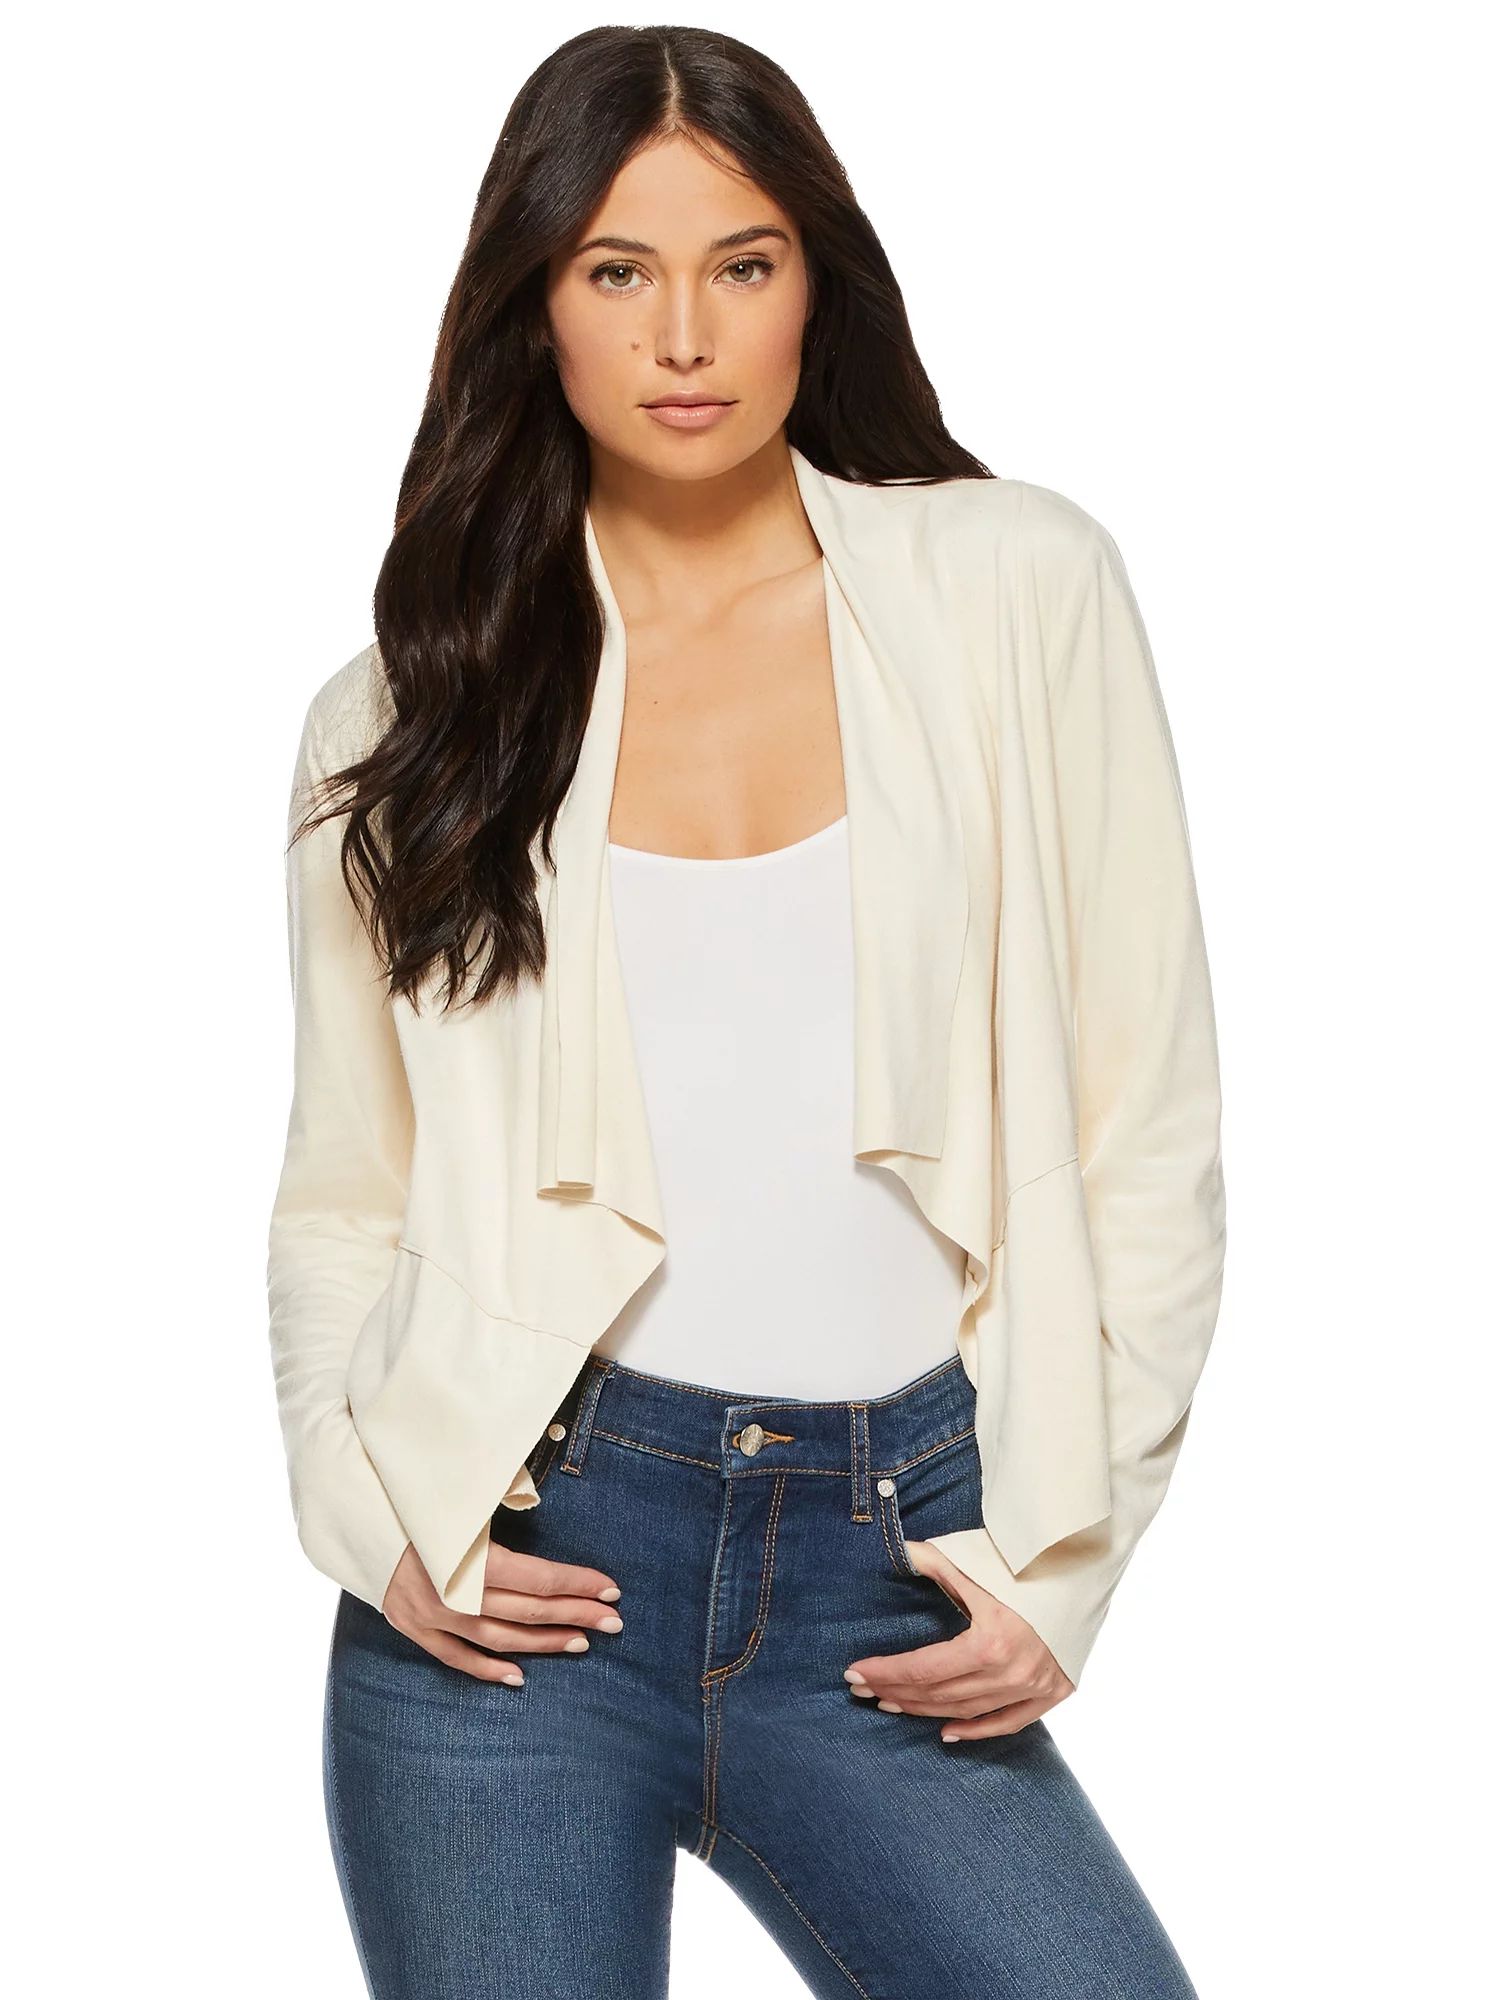 Sofia Vergara Long Sleeve Fashion Jacket (Women's) 1 Pack | Walmart (US)